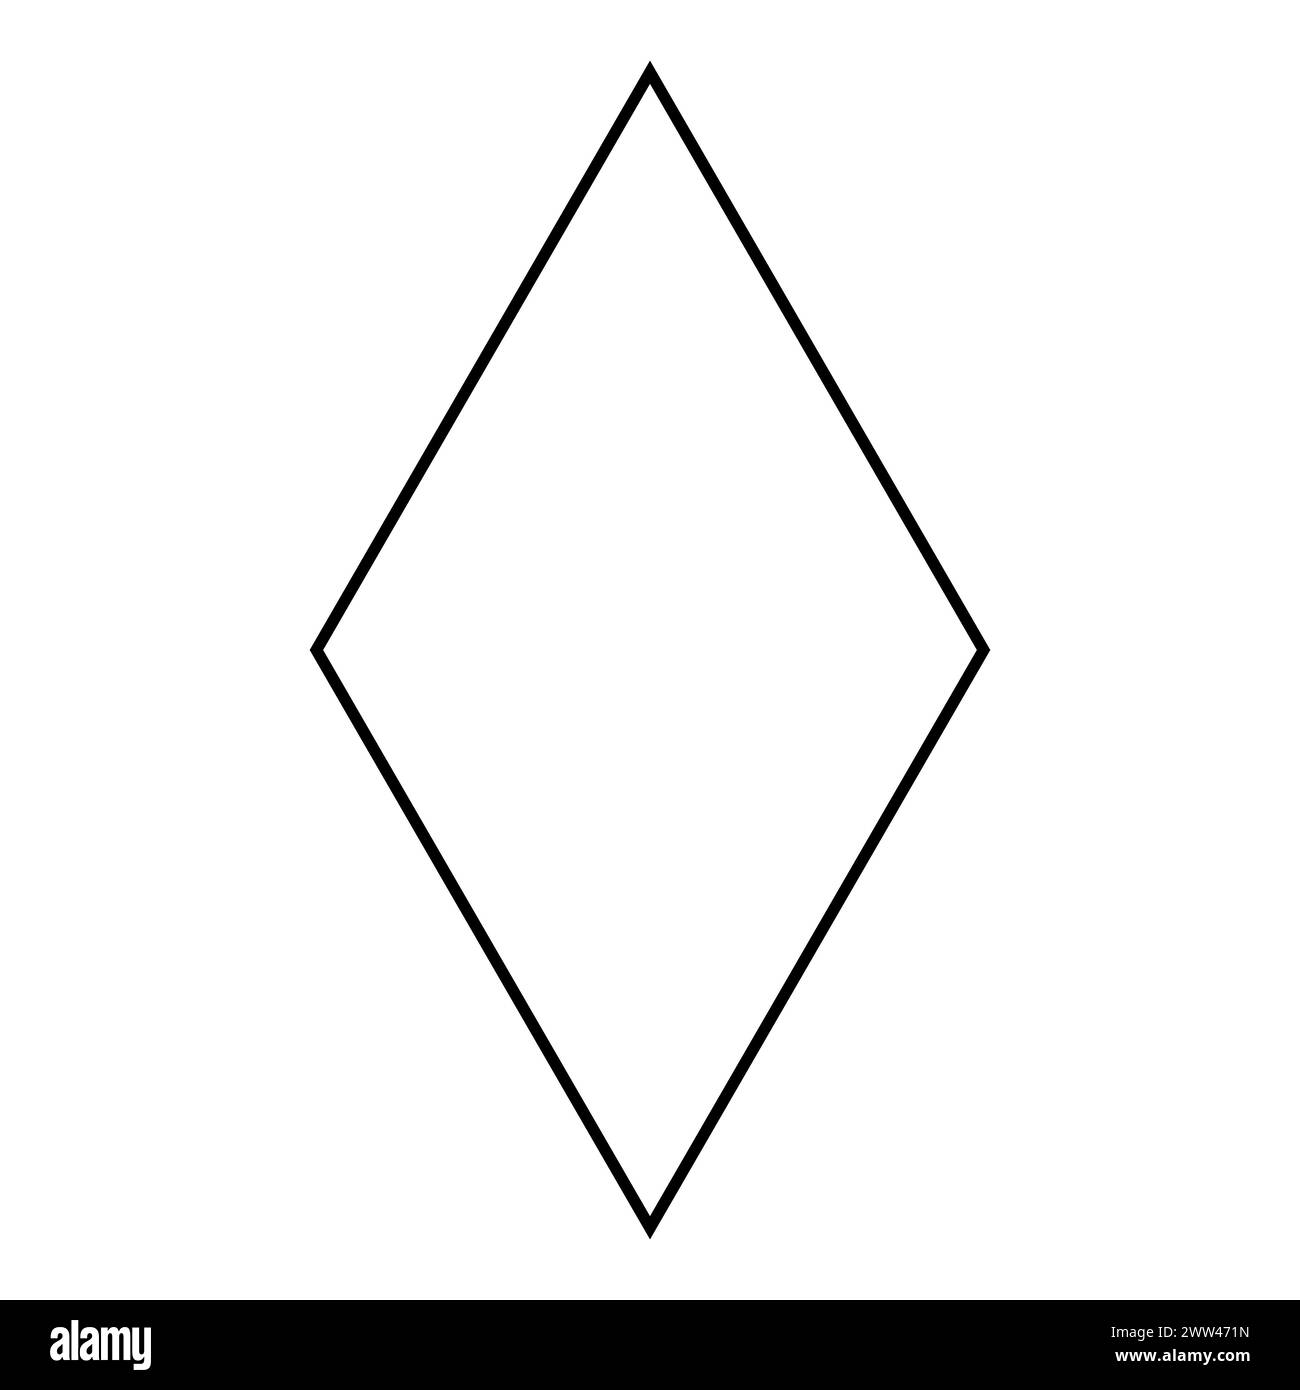 Rhombus shape symbol, black and white vector silhouette illustration Stock Vector